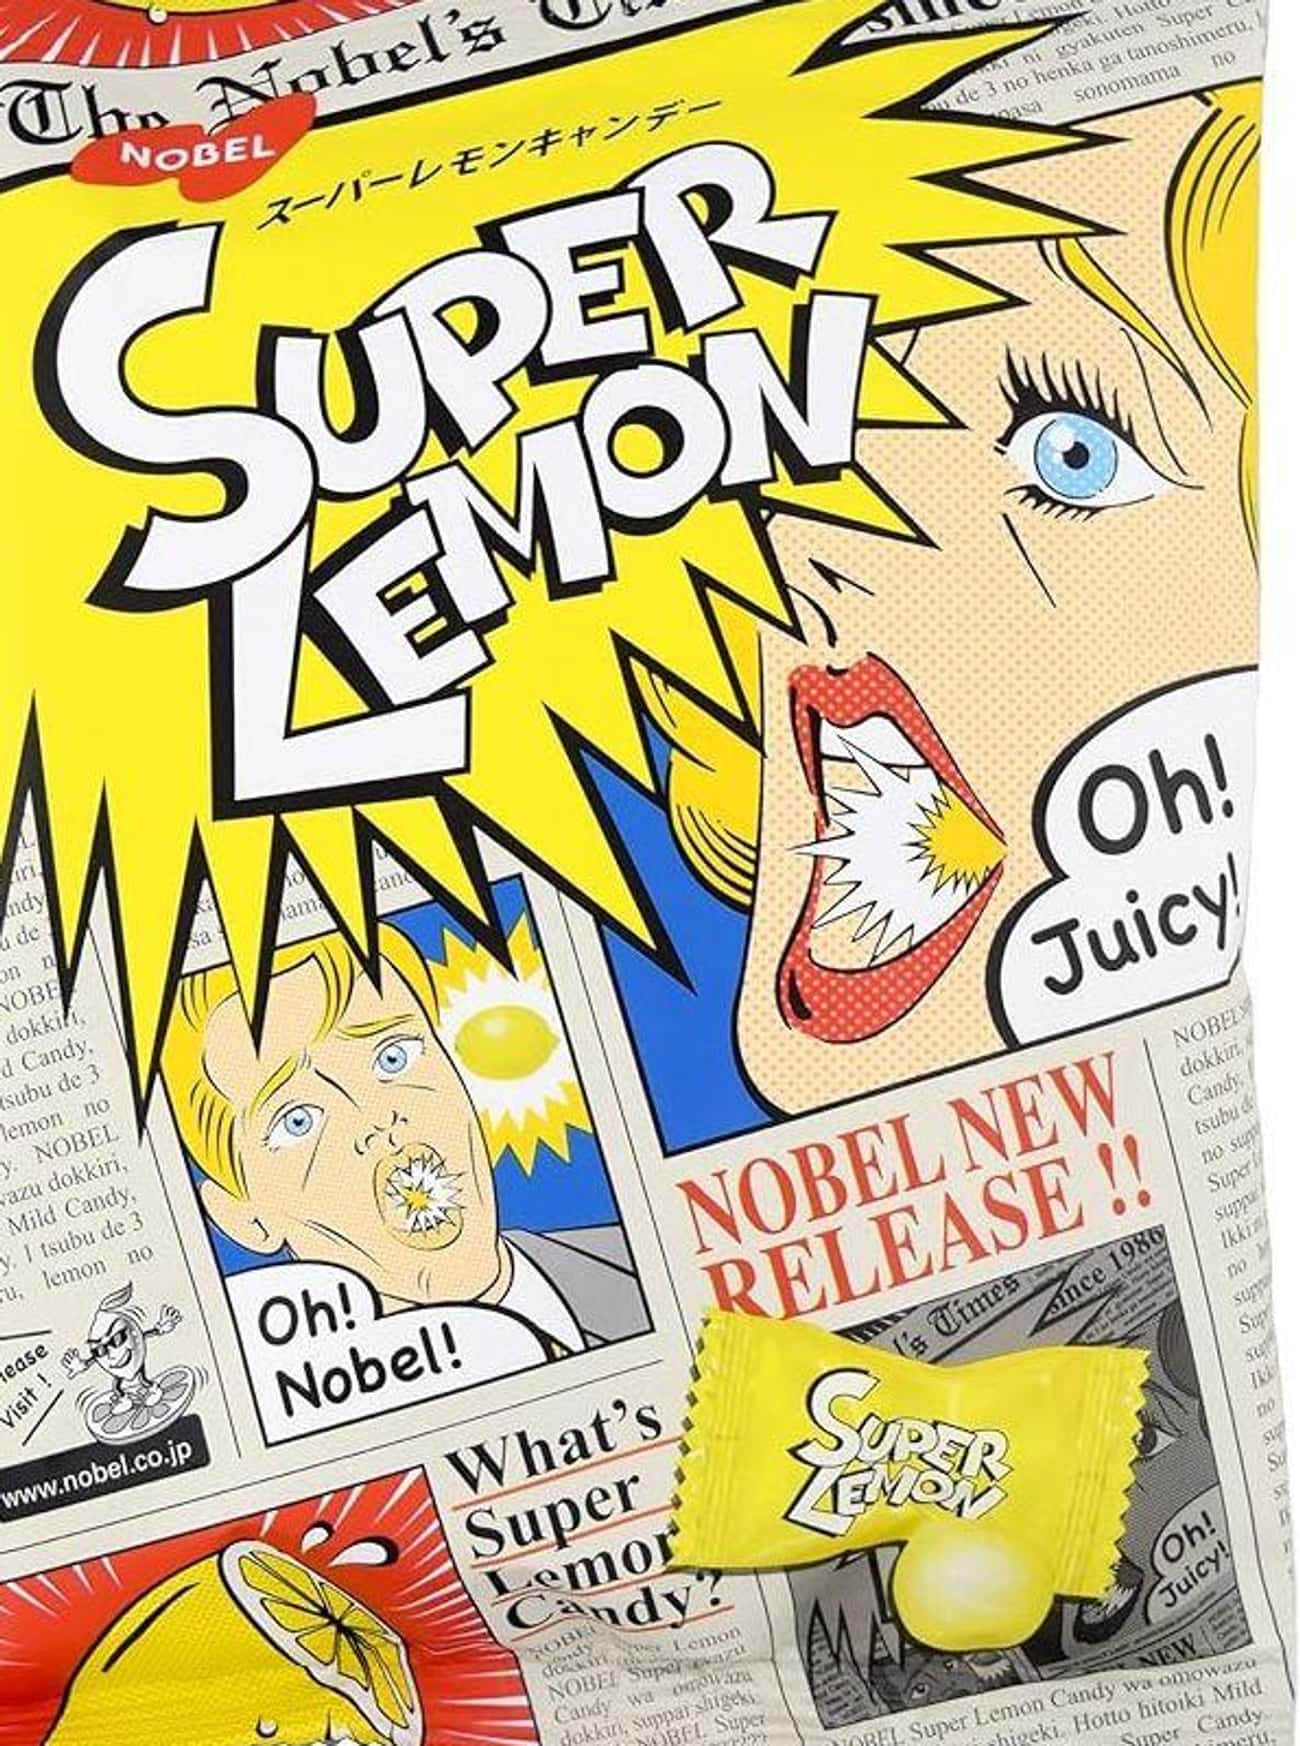 Nobel Super Lemon